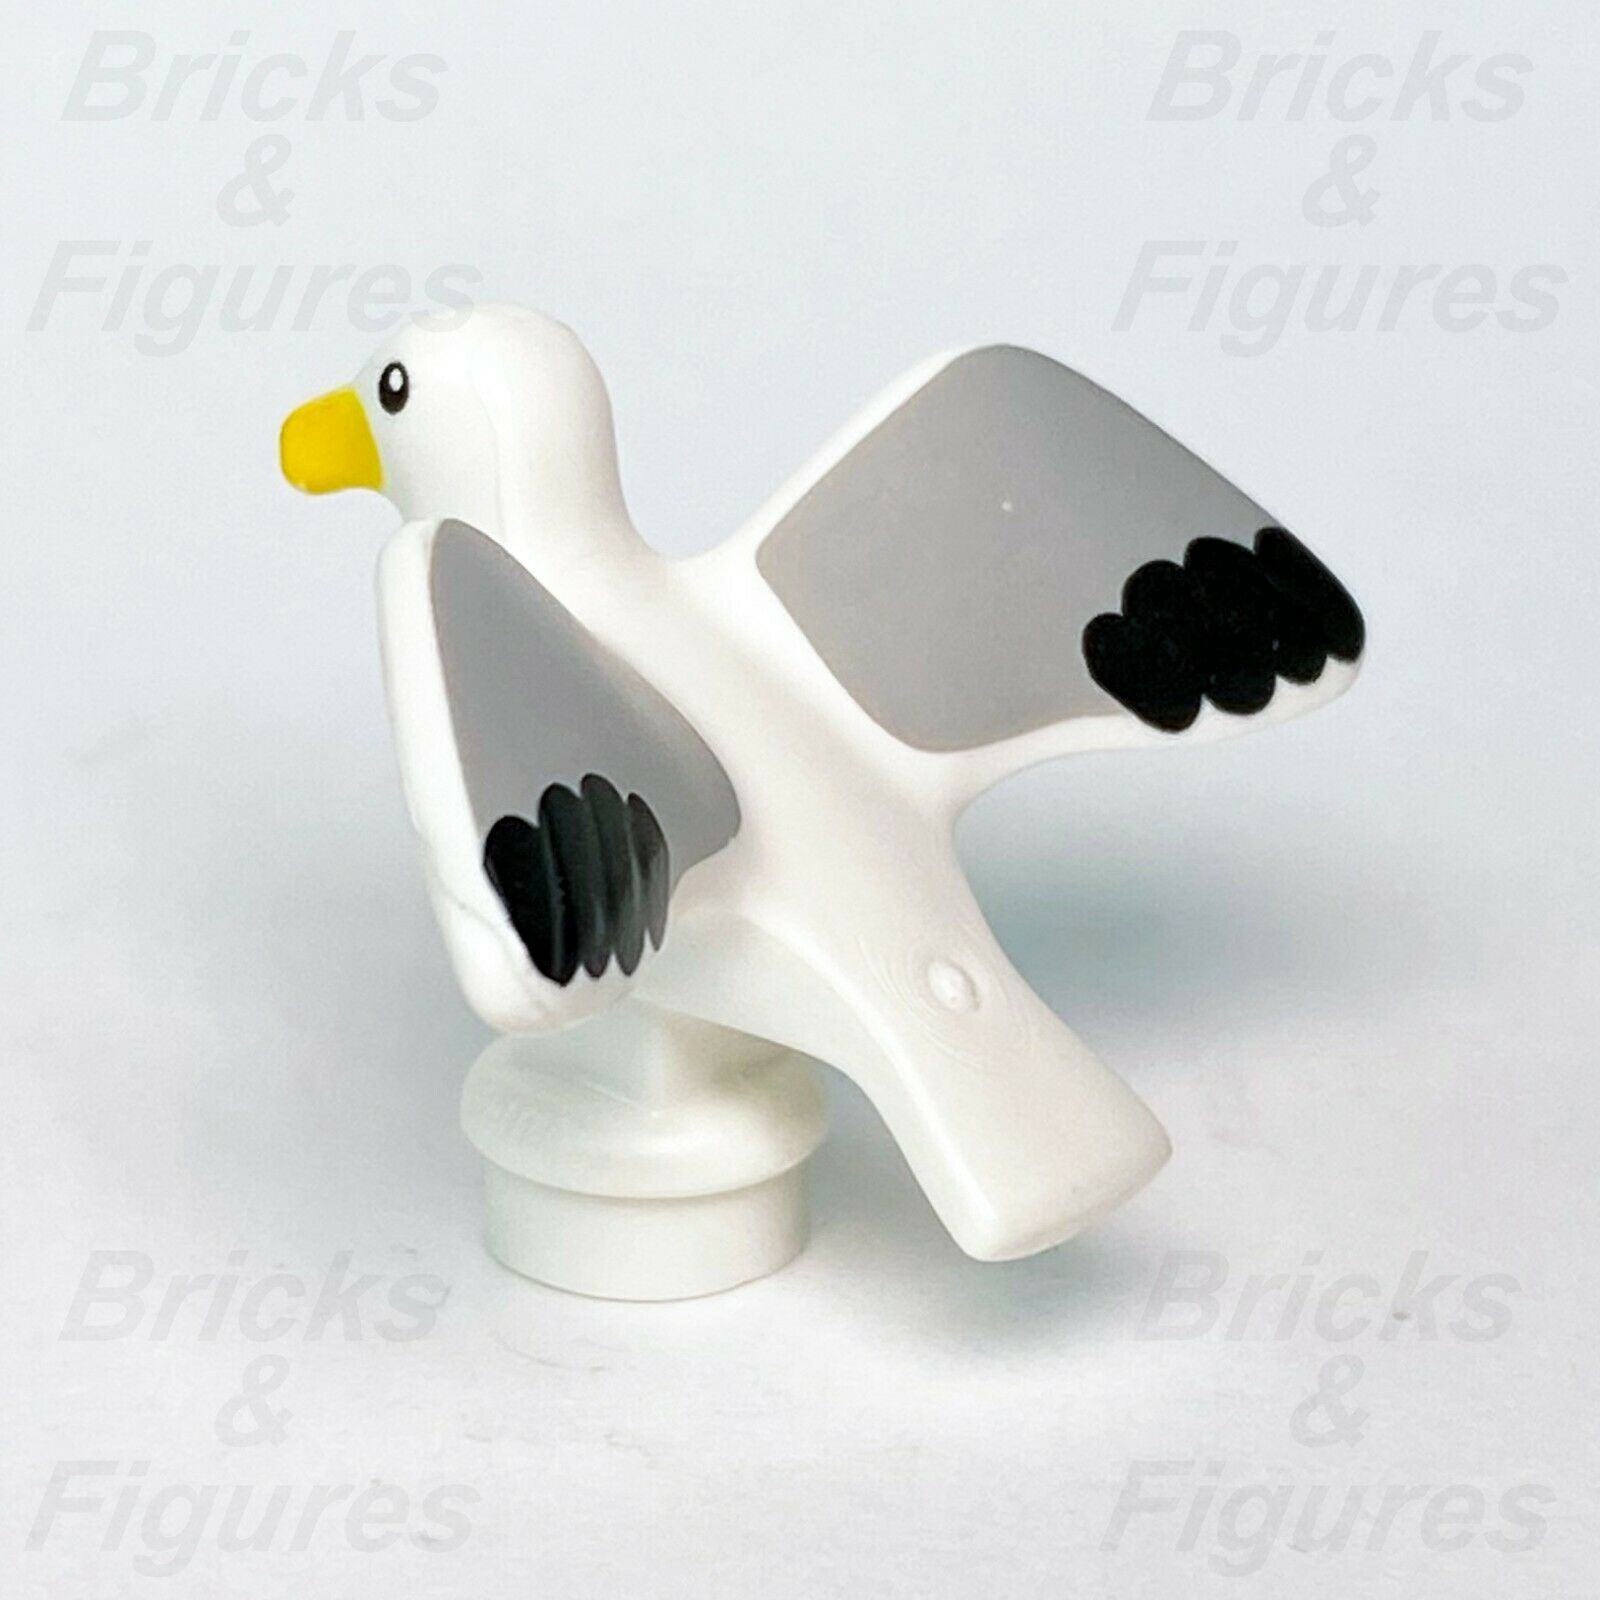 New Town City Recreation LEGO Seagull Bird Animal Part Ideas 60271 21310 10261 - Bricks & Figures